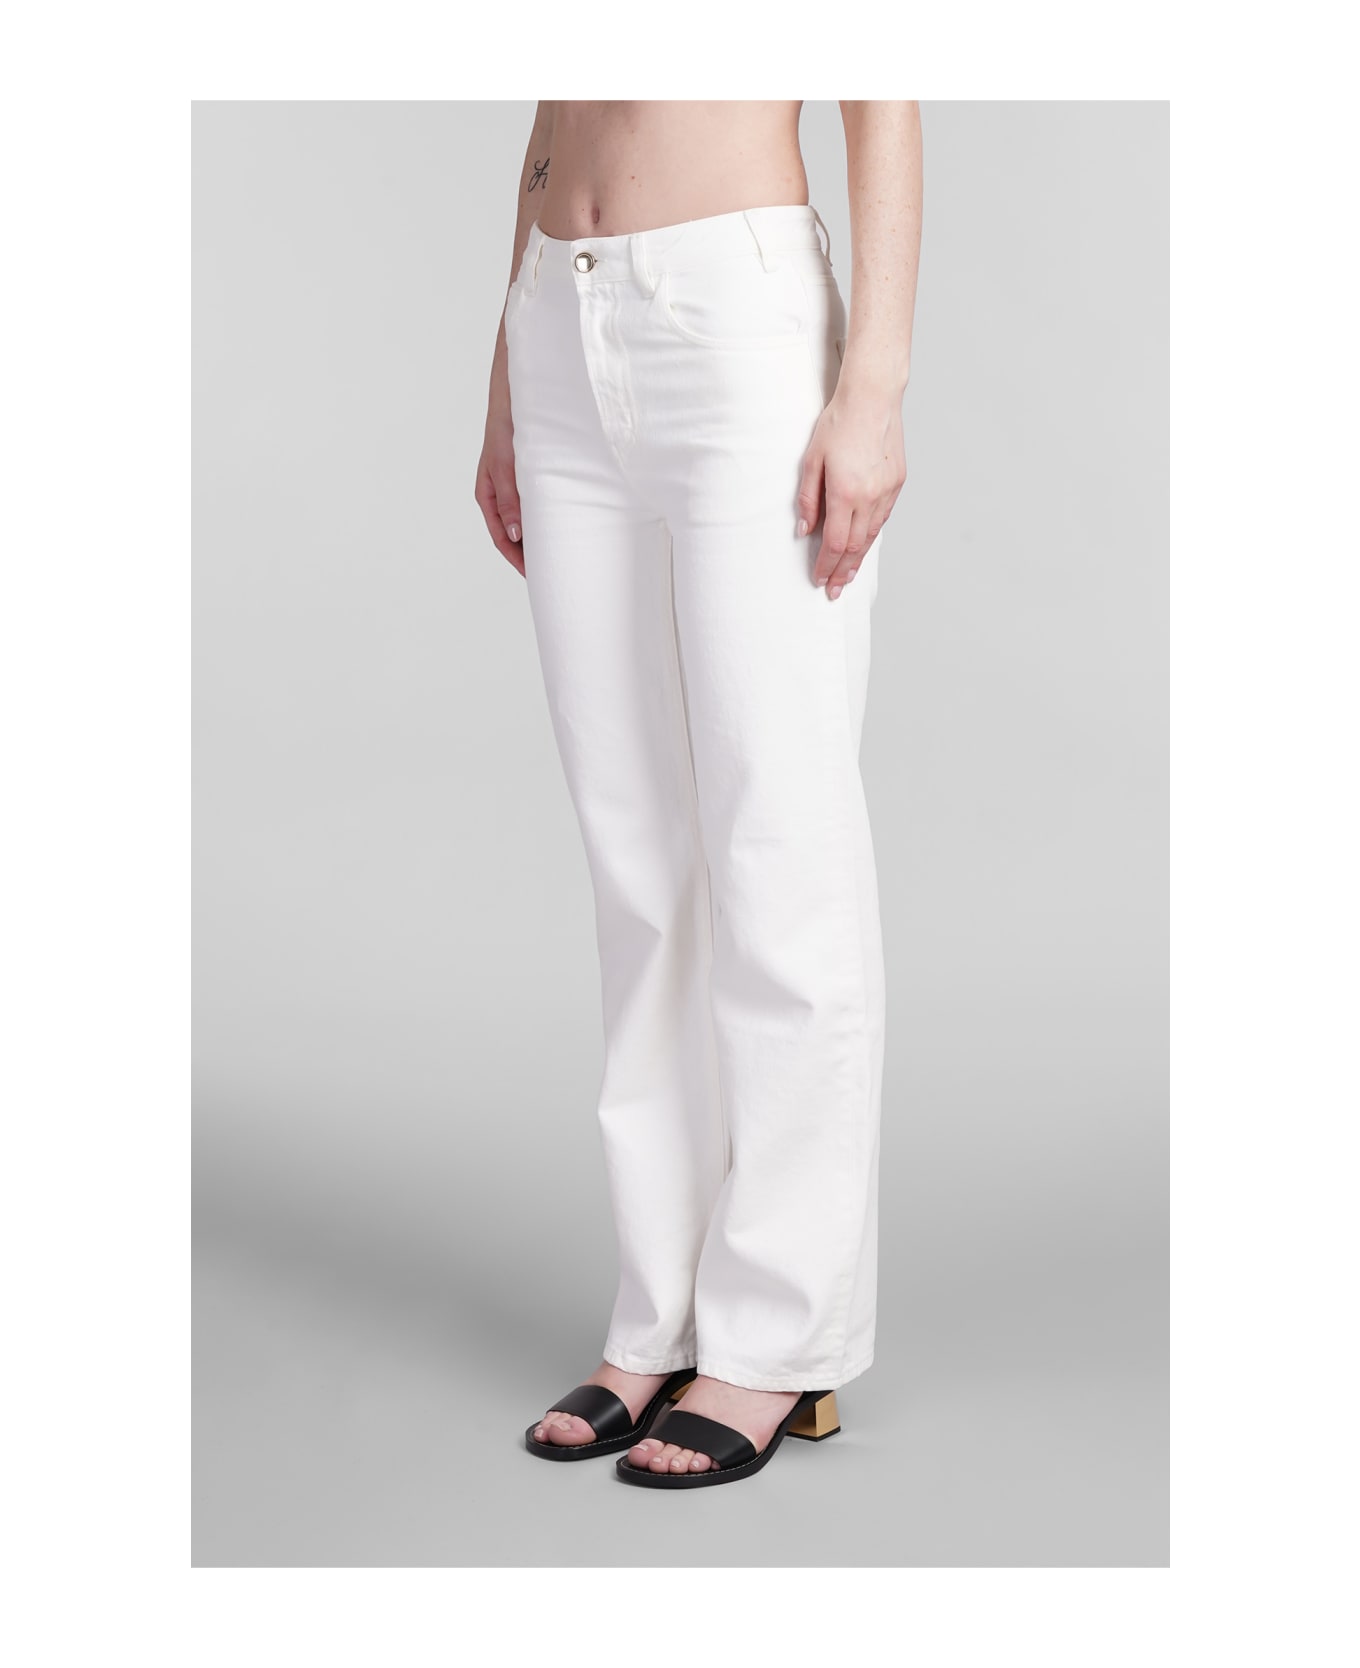 Chloé Jeans In White Cotton - white